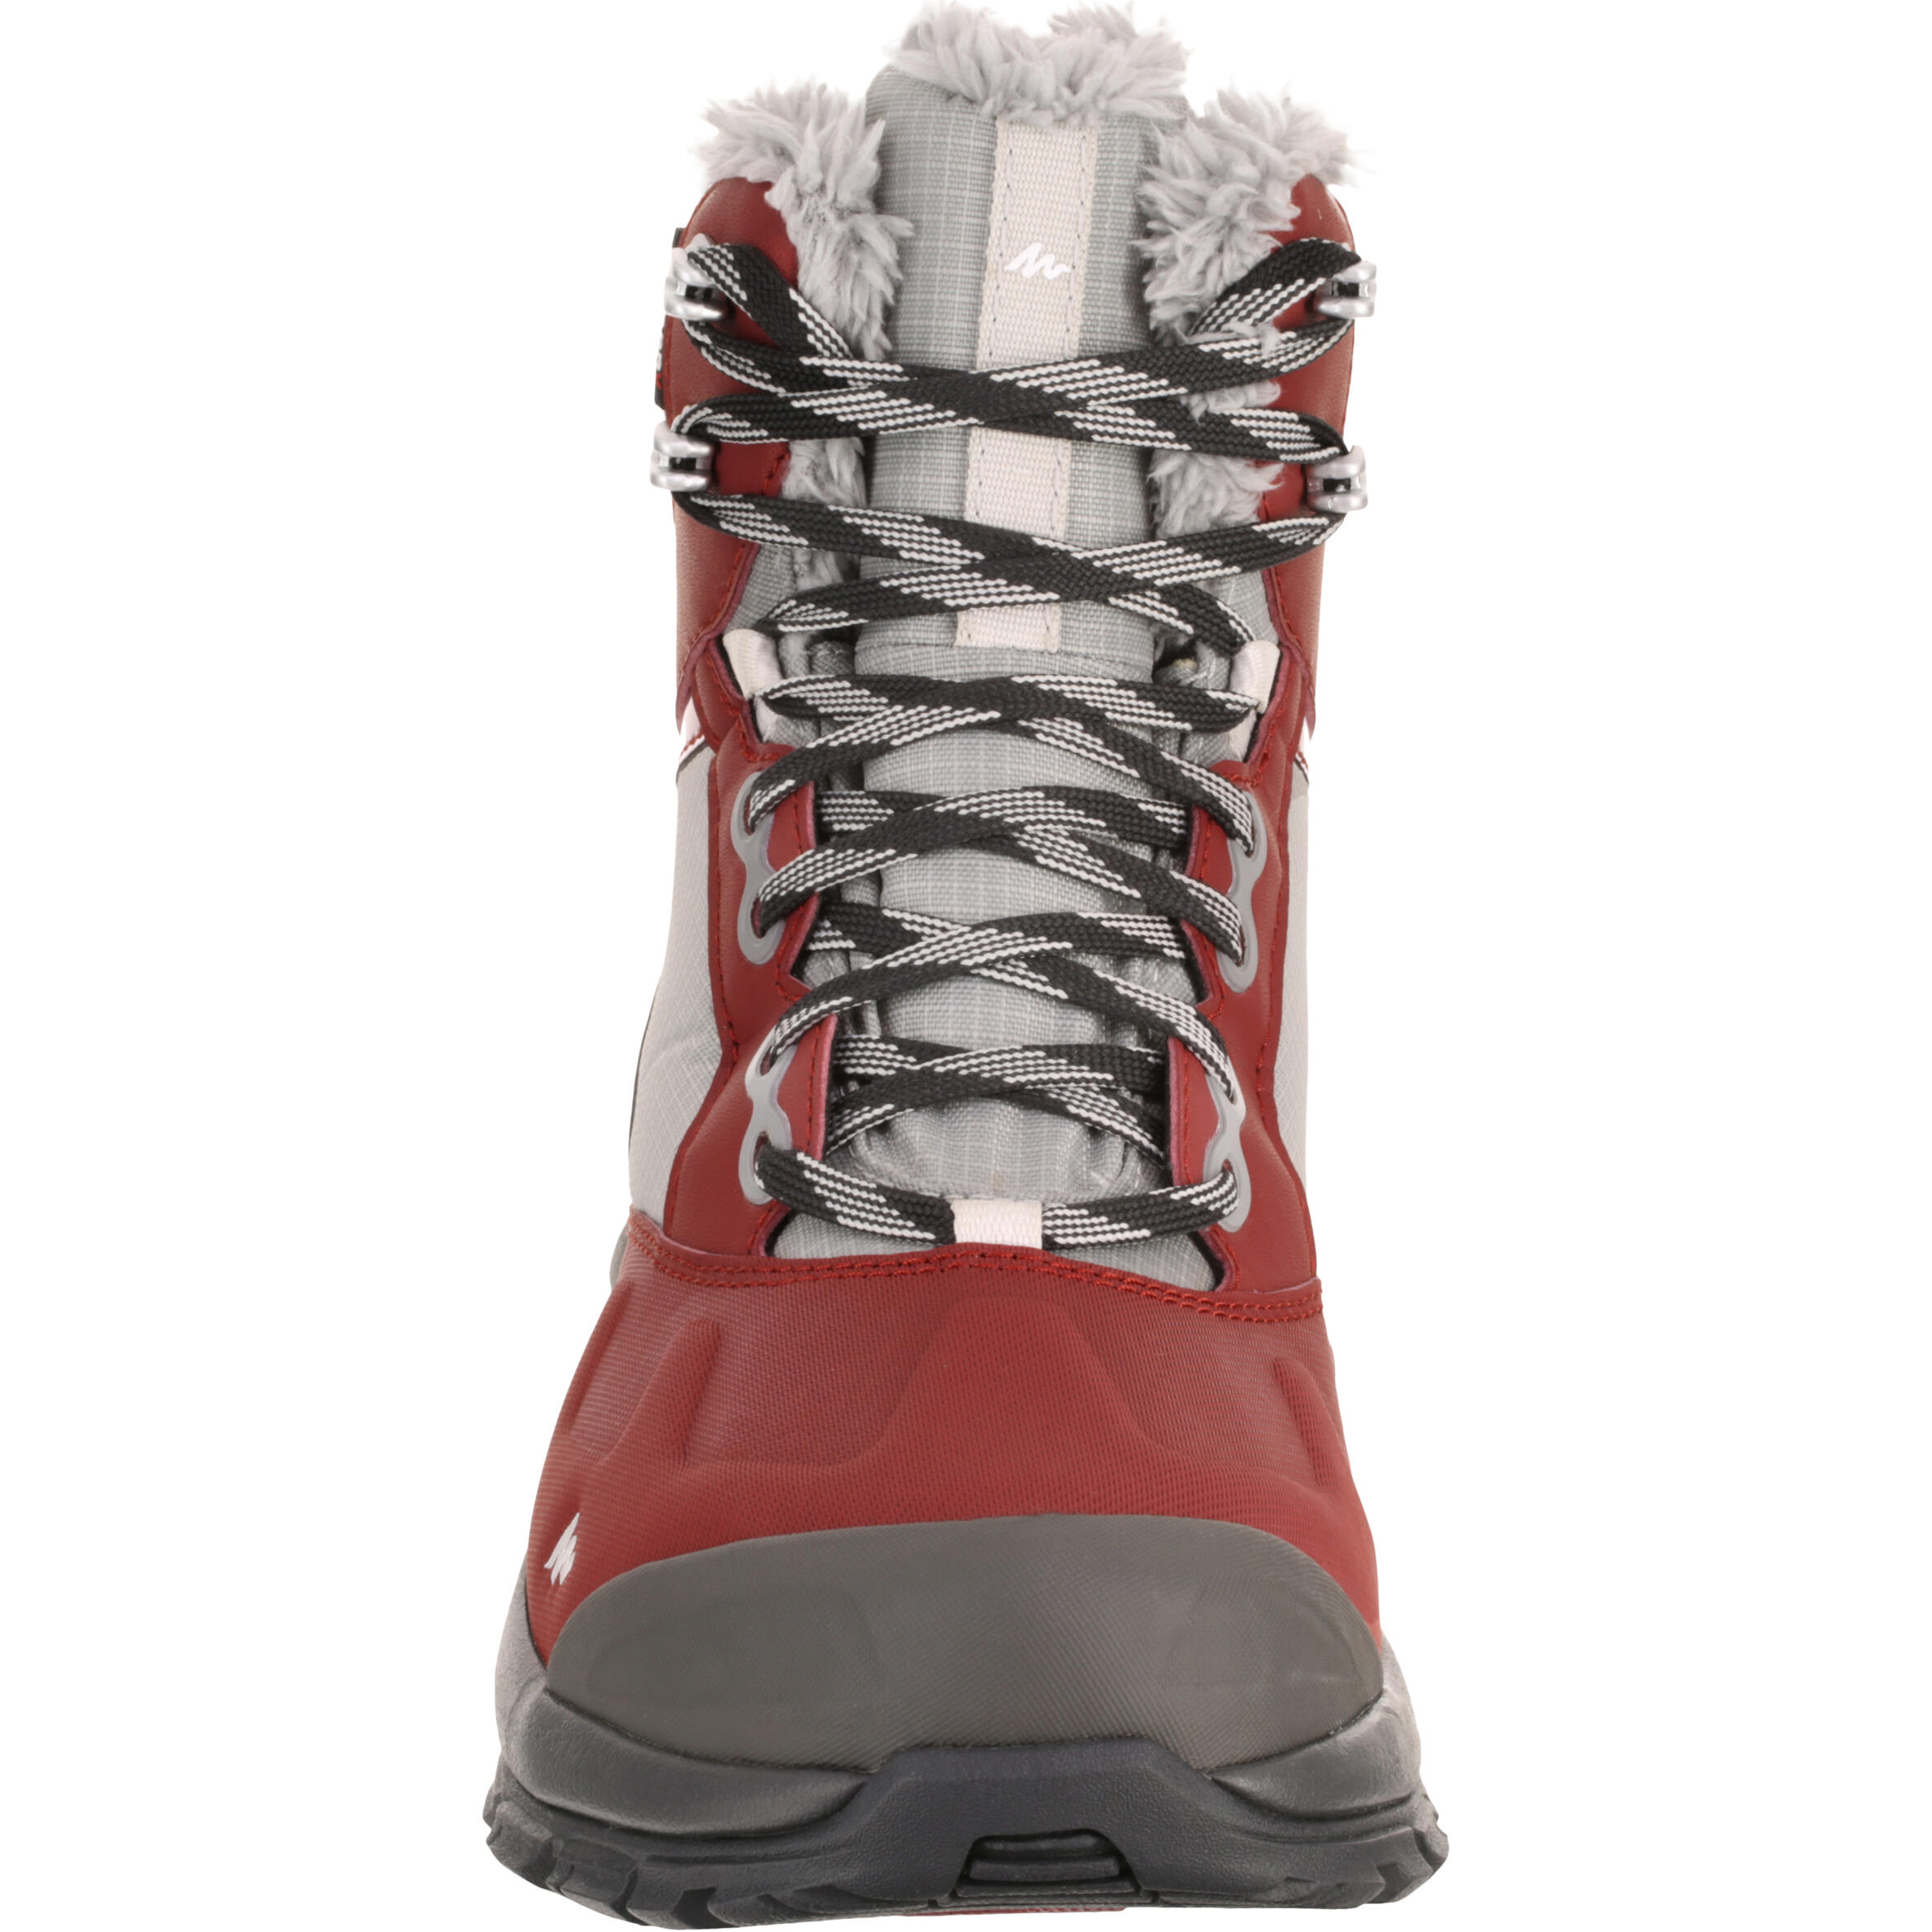 Forclaz 500 Waterproof Women'S Hiking Boots - Burgundy 4/16